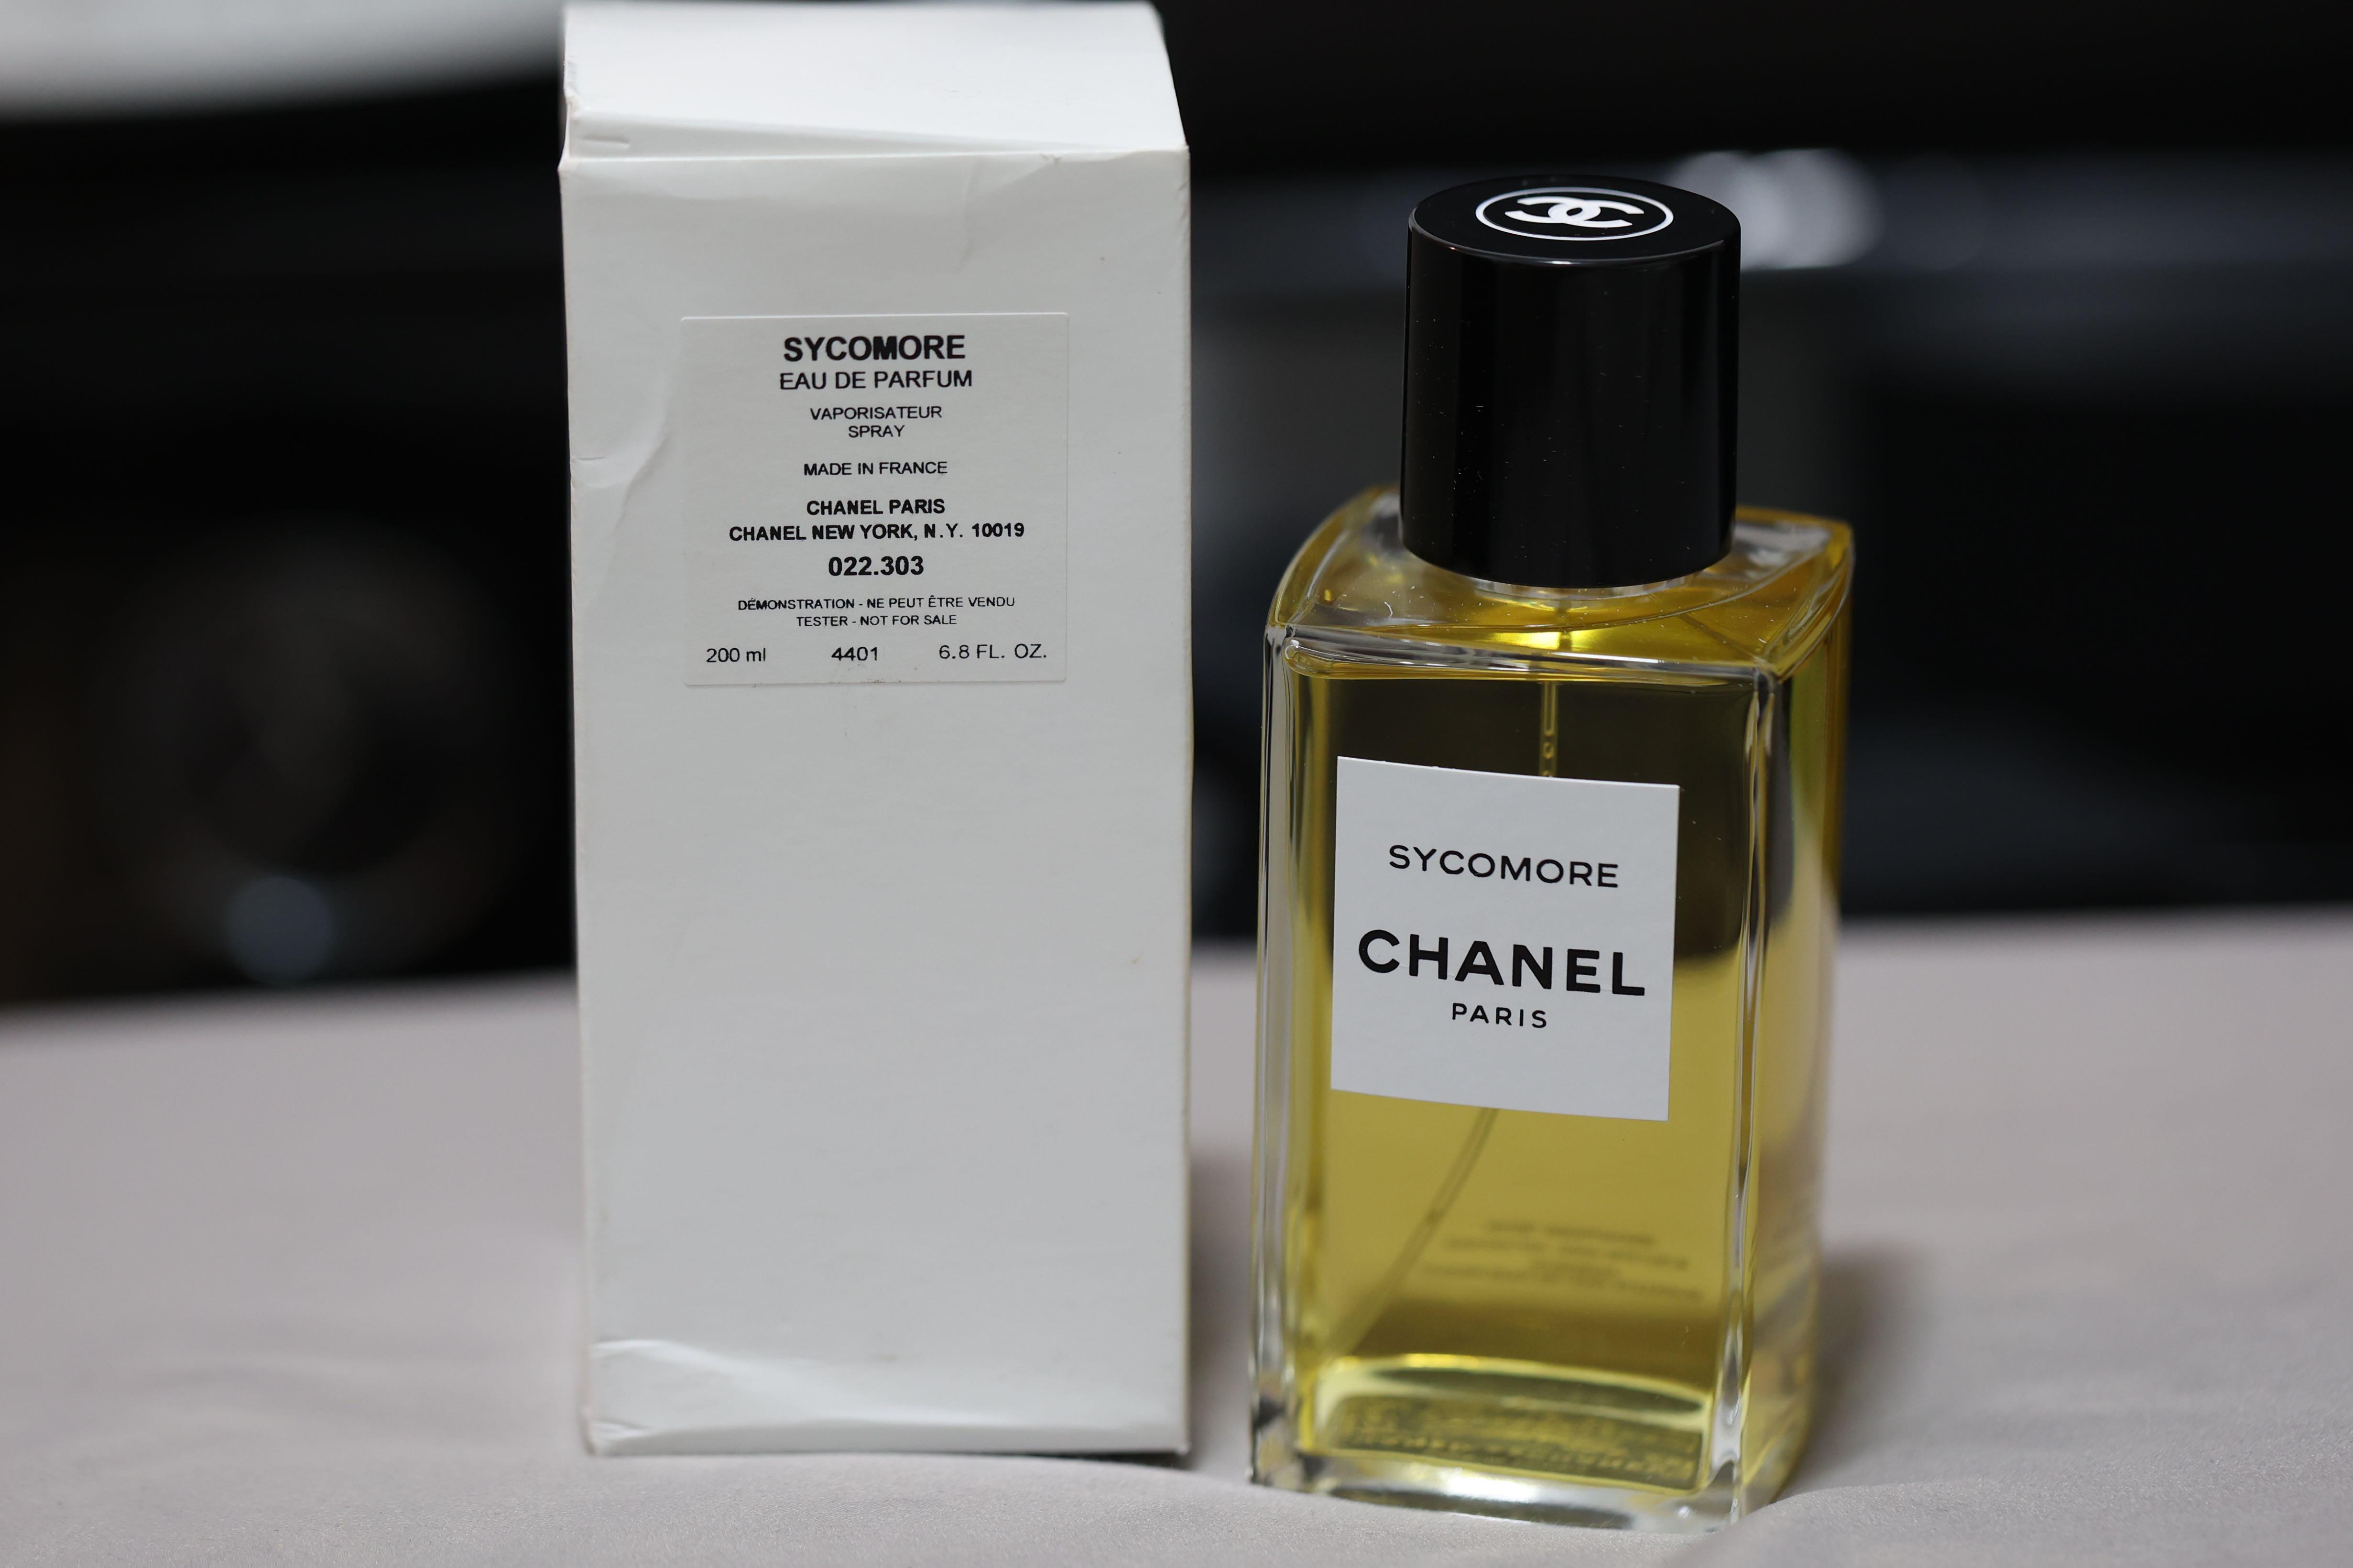 Chanel Sycomore Les Exclusifs De Chanel (U) Set Edp 75ml + Body Cream 150g